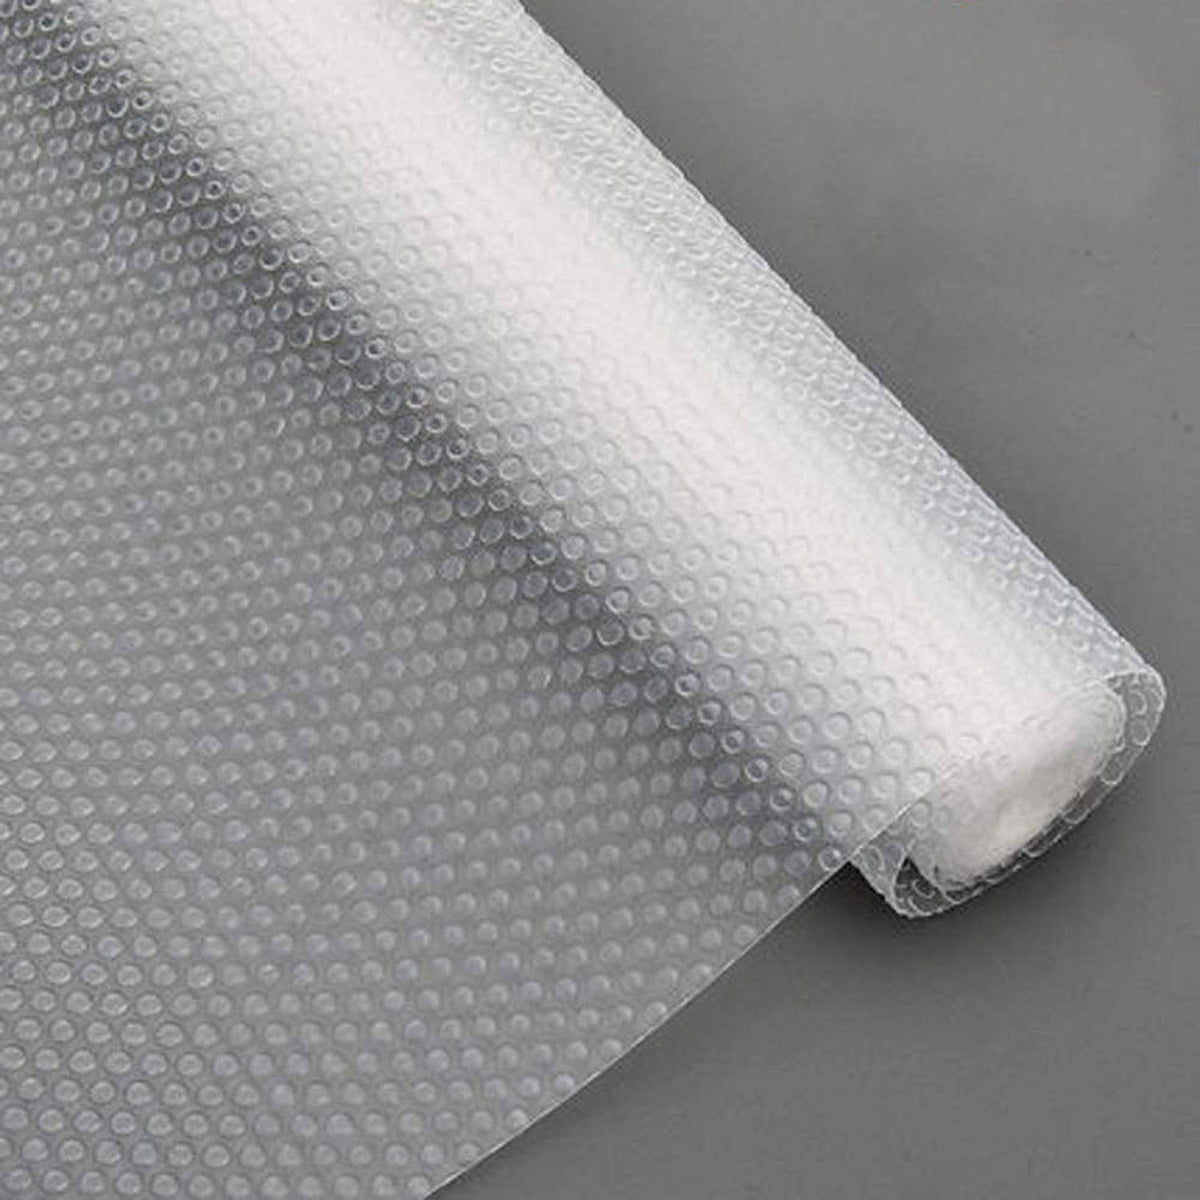 Kuber Industries Duty Diamond Non-Slip Drawer Liner Cabinet Mat|1.5 MTR Roll & Easy to Cut|Size 150 x 30 CM (White)- (KUBMART011931), Polyvinyl Chloride